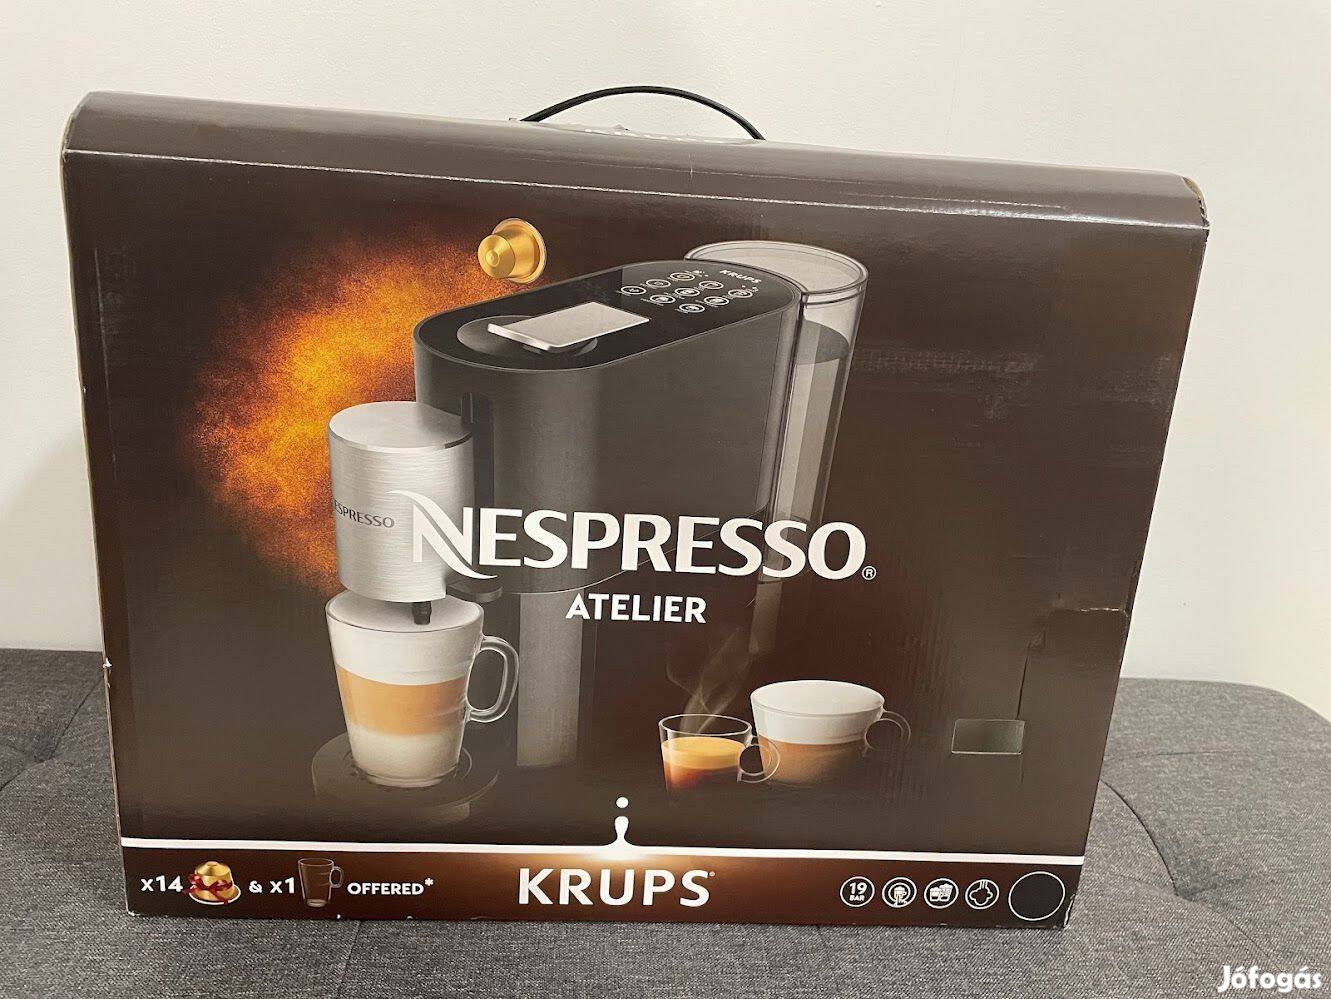 Espresso Krups Atelier kapszulás kávéfőző tejhabosítóval